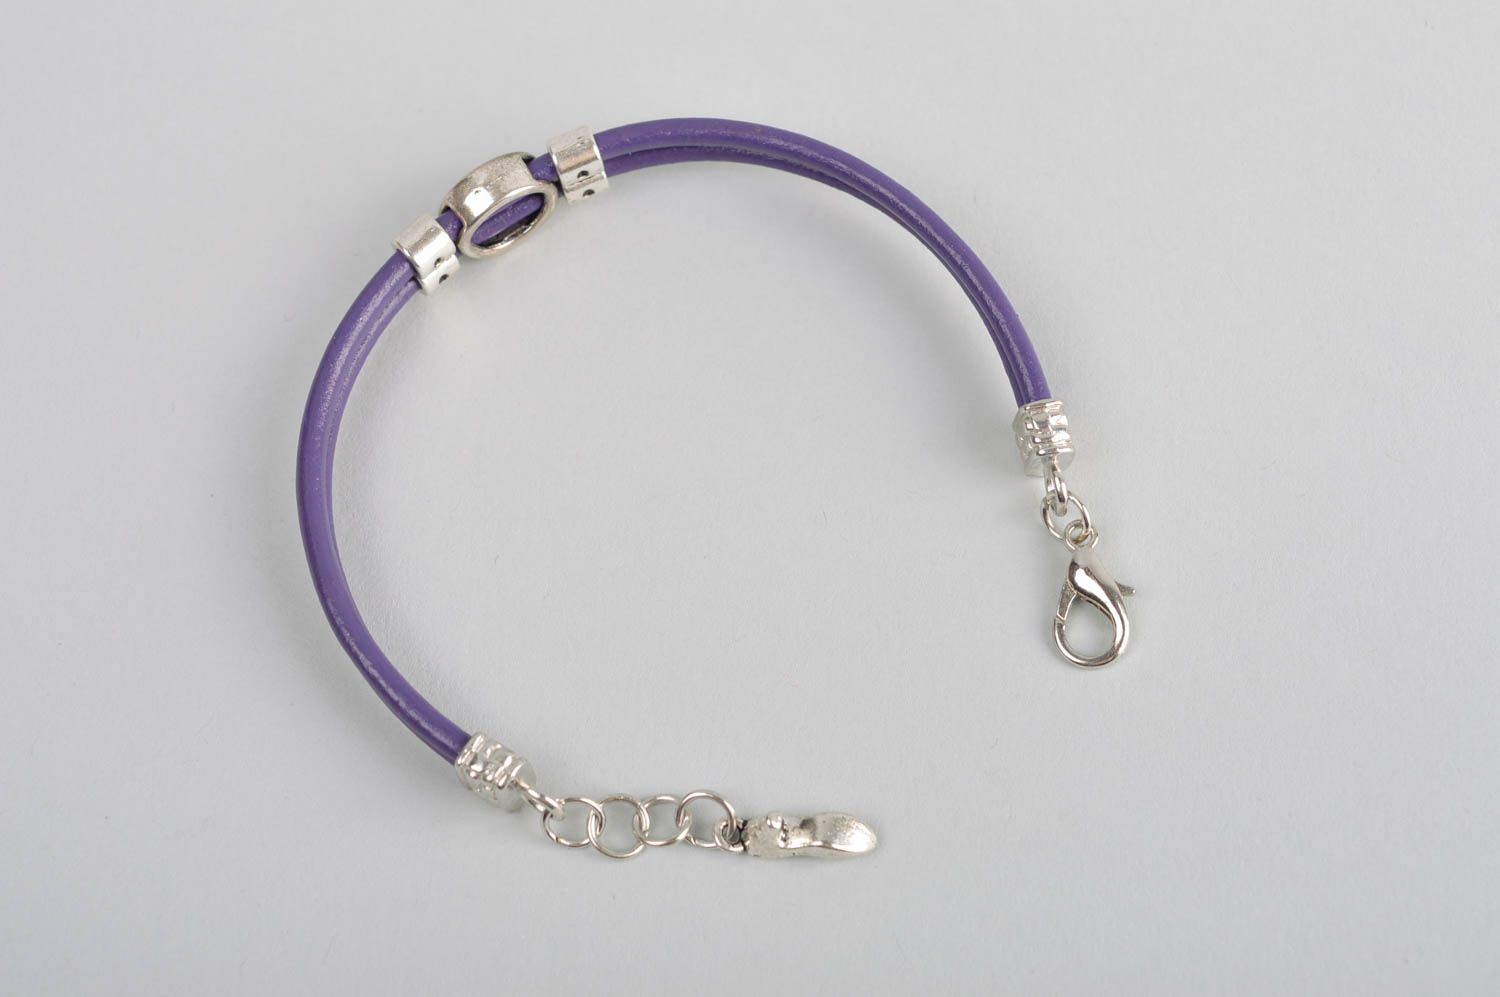 Unusual handmade leather bracelet cord bracelet designs artisan jewelry photo 5